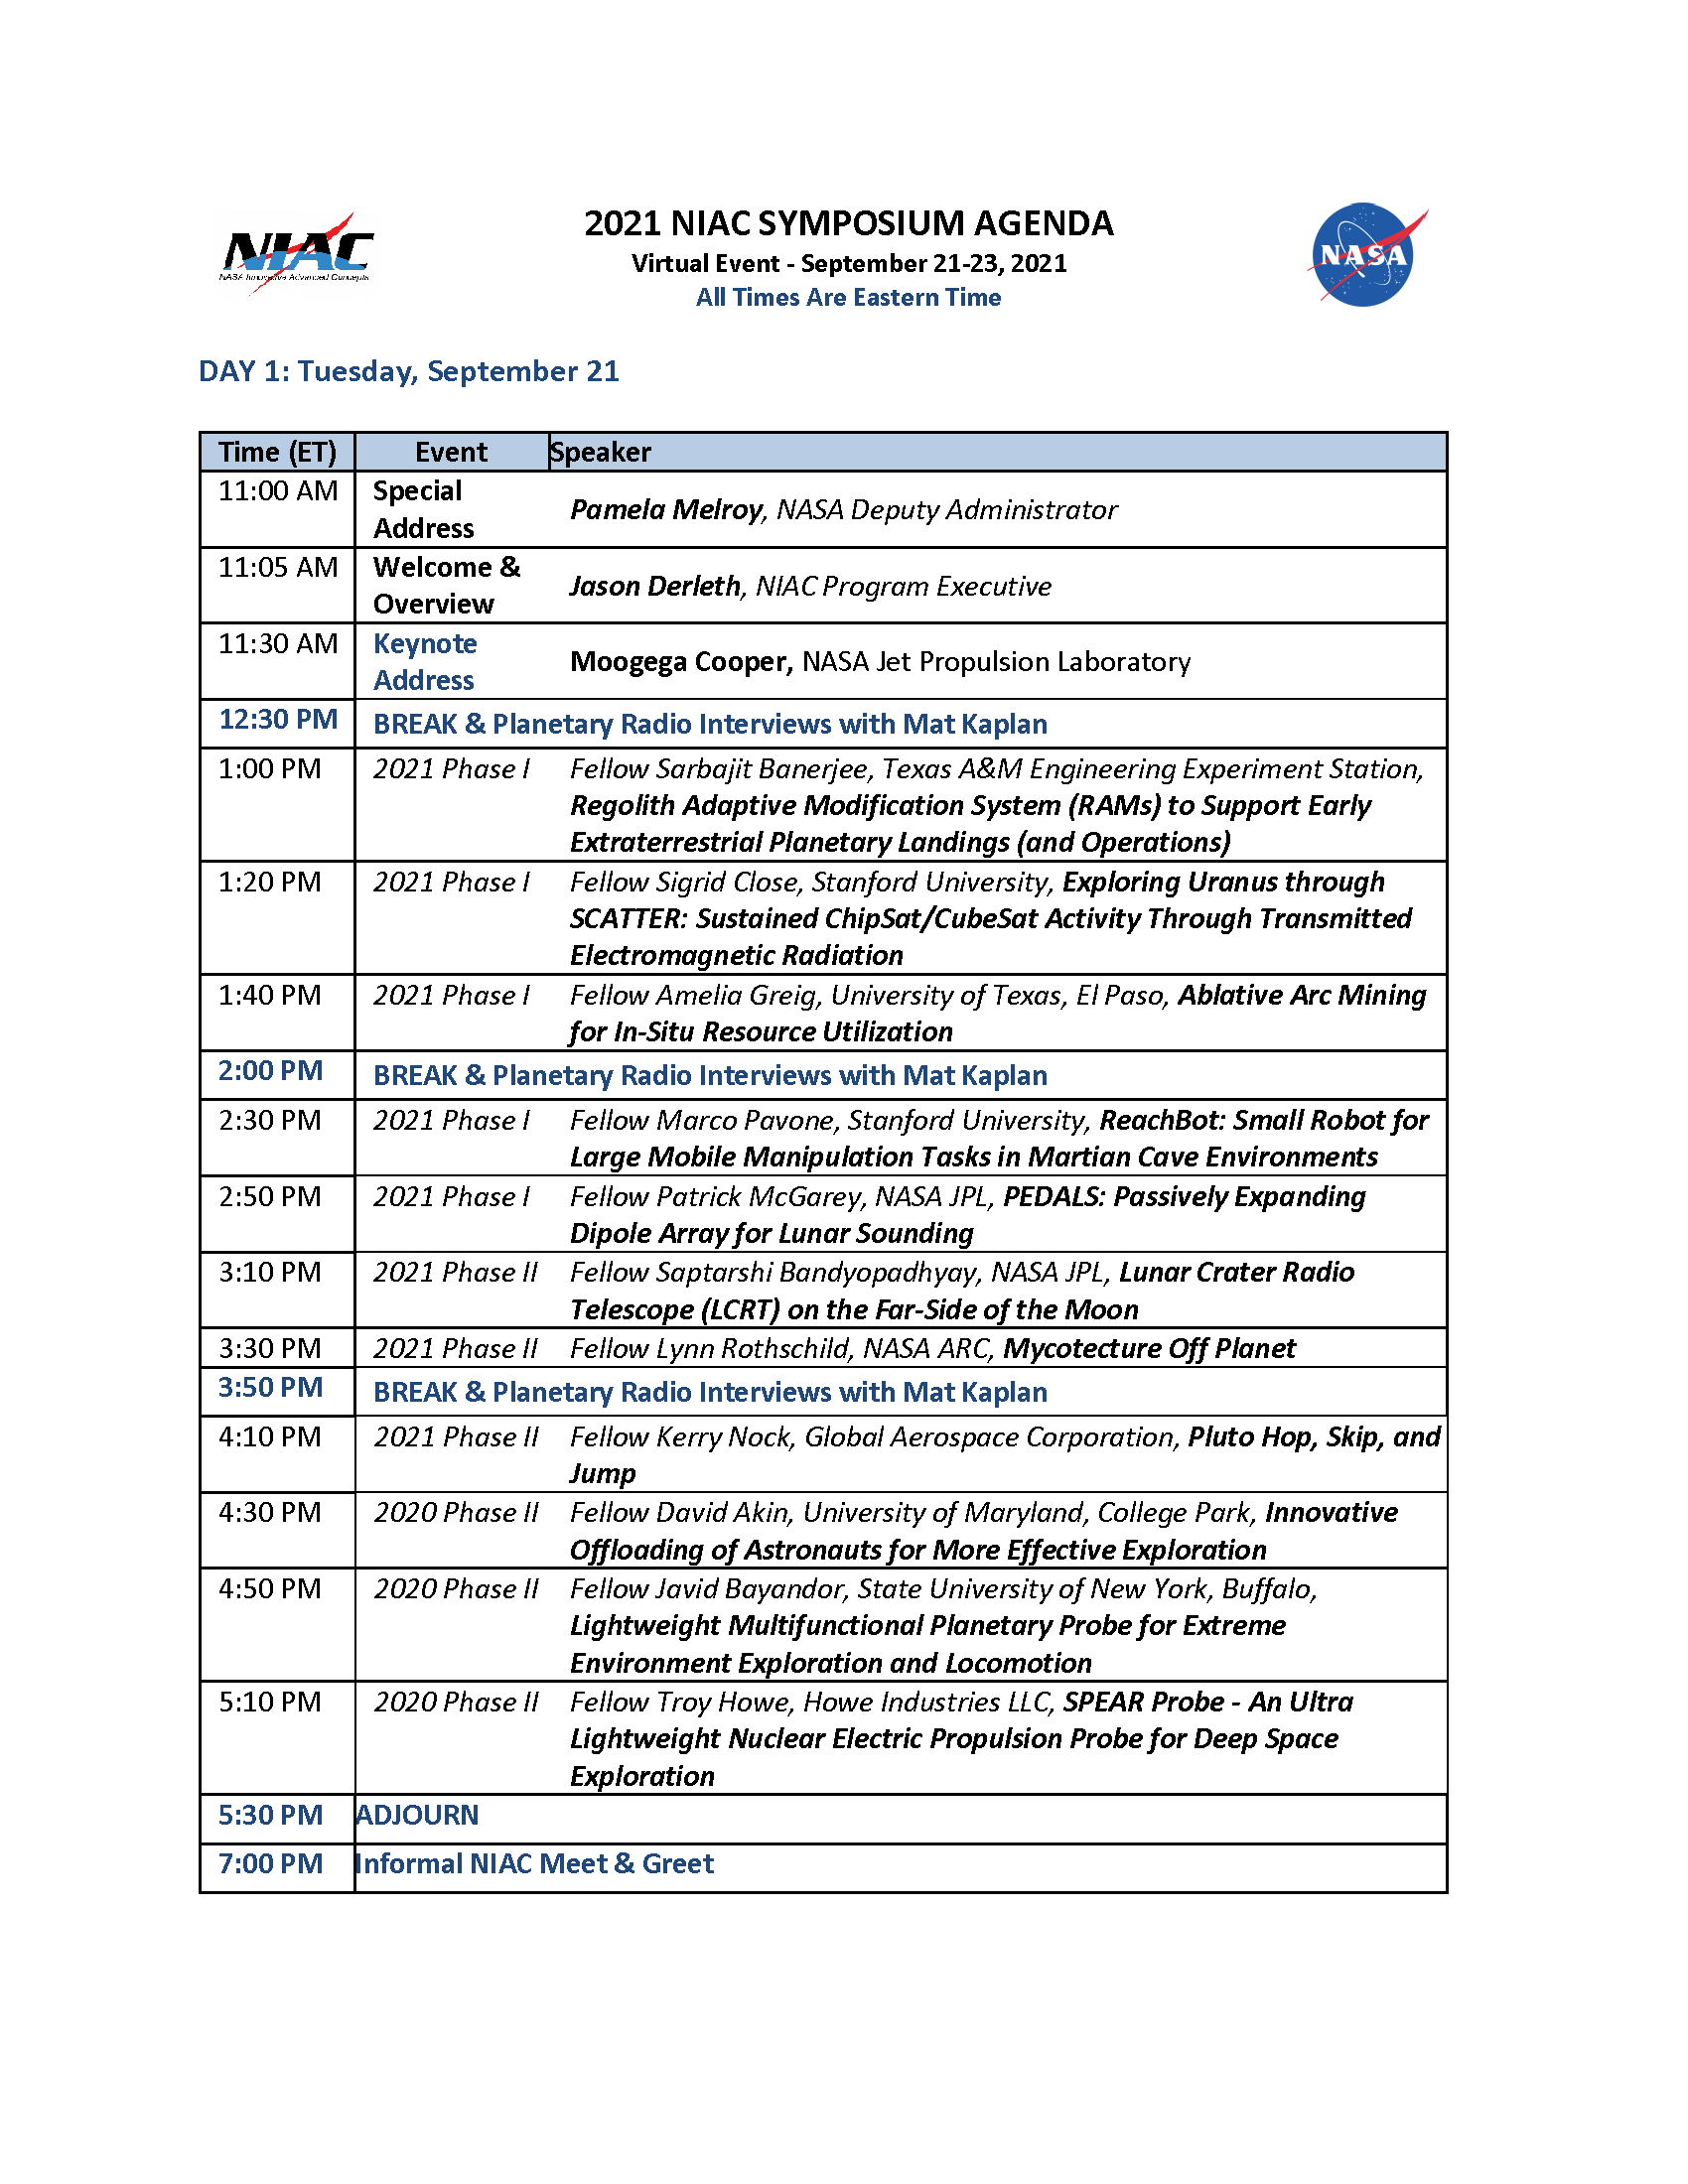 NIAC Symposium 2021 (NASA Innovative Advanced Concepts) r/space